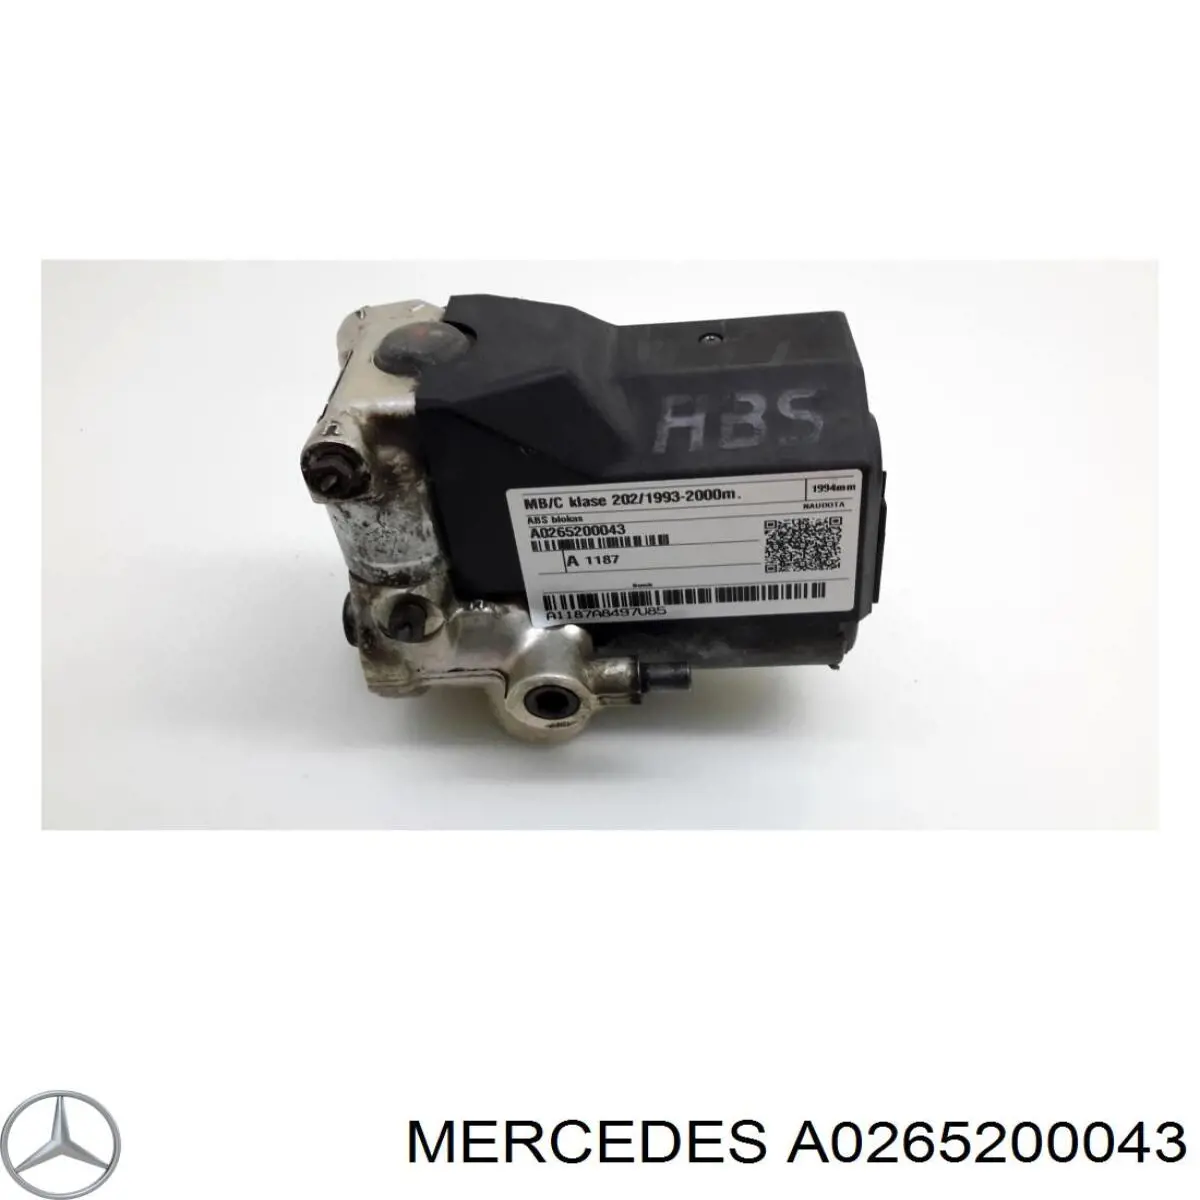 A0265200043 Mercedes блок управления абс (abs гидравлический)